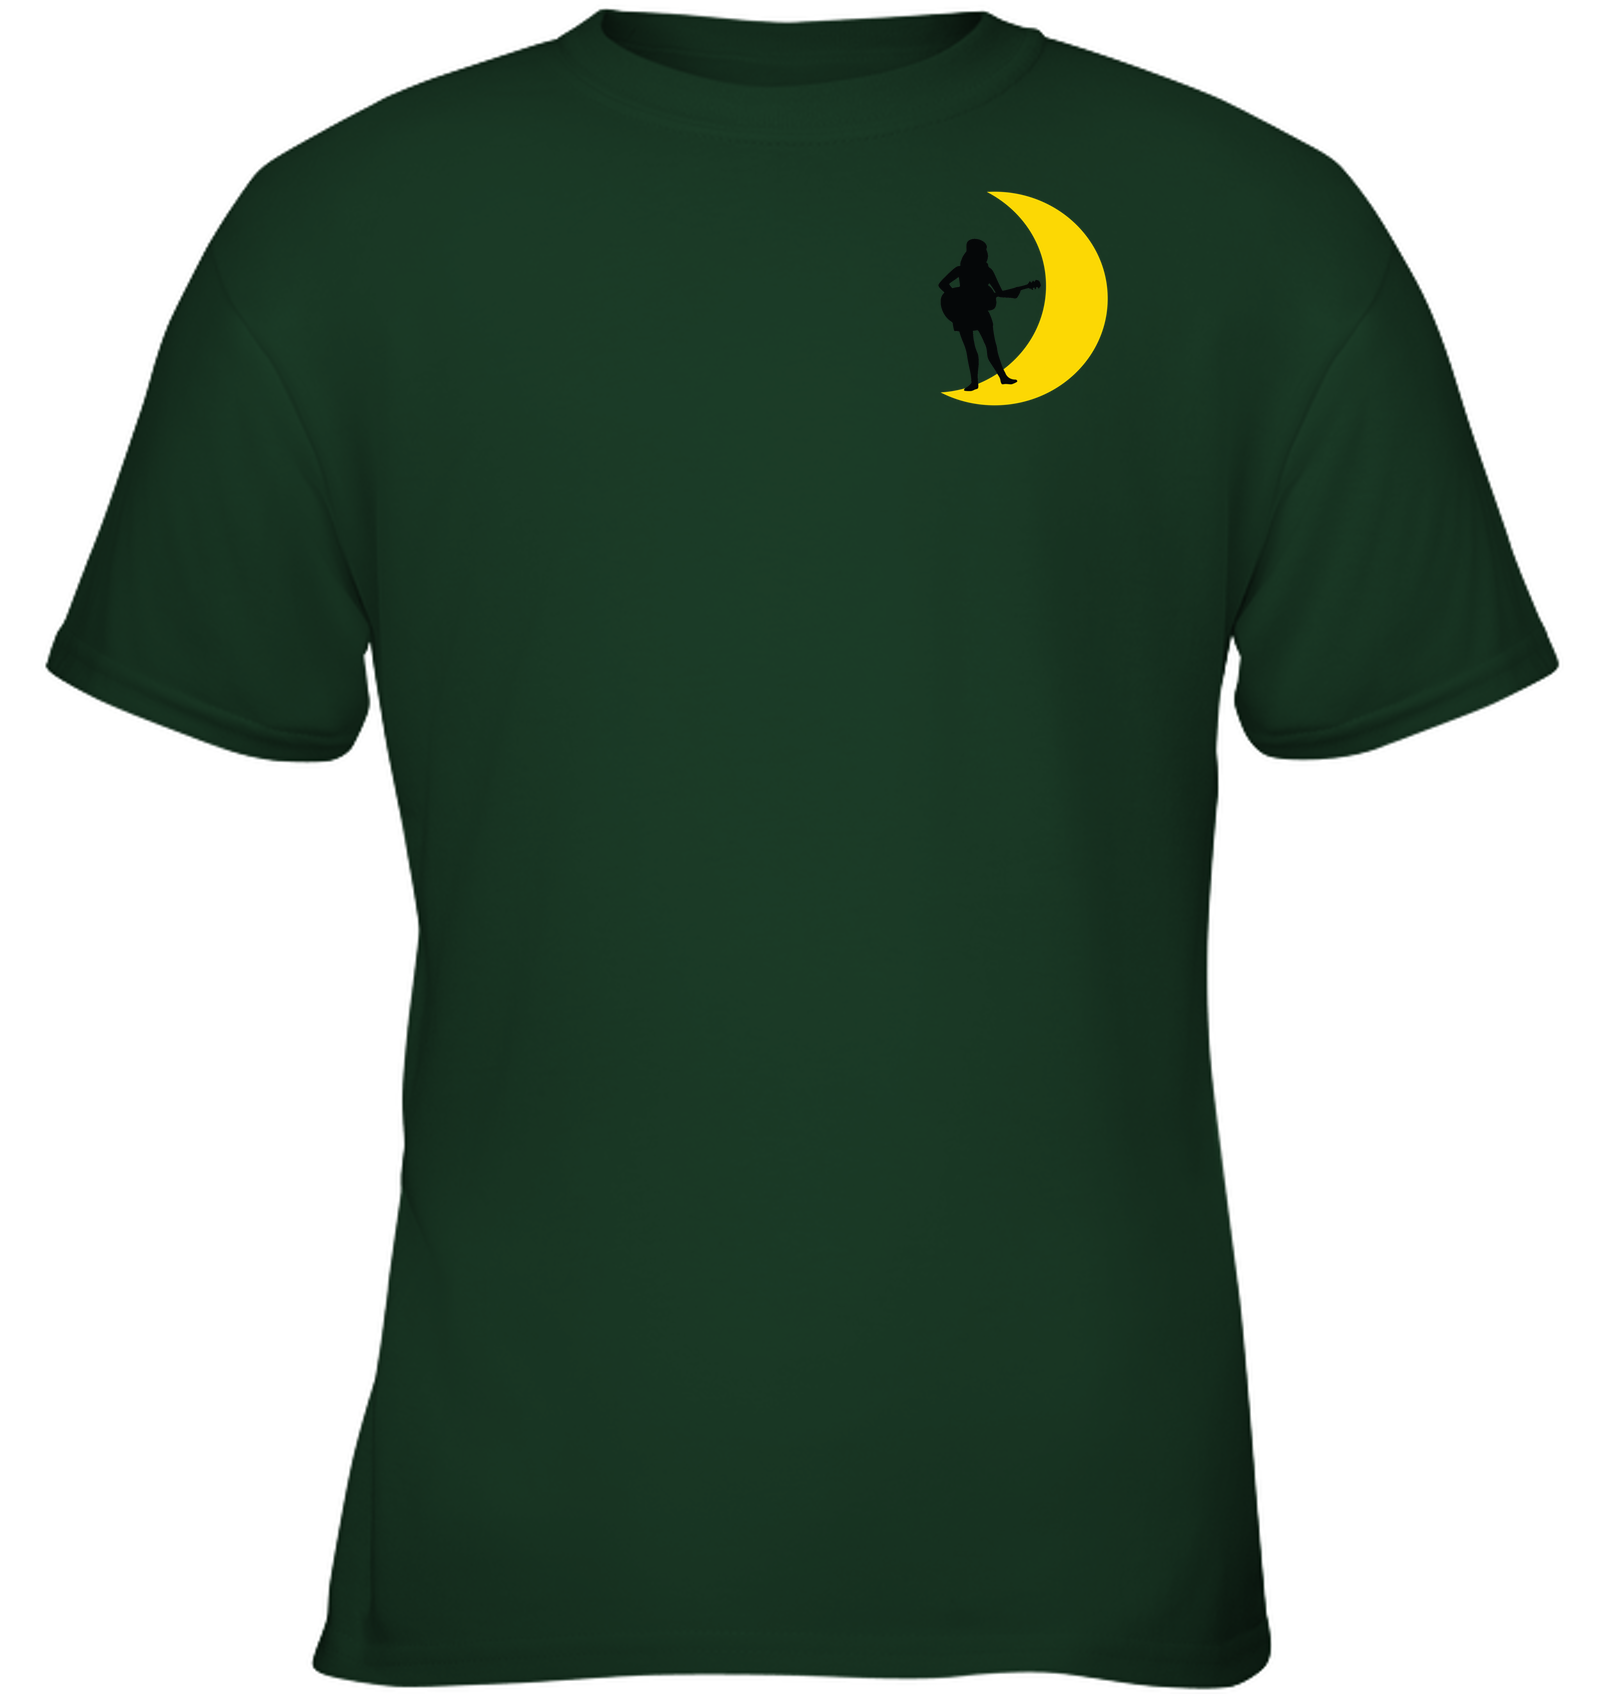 Moonlight Guitar Player (Pocket Design) - Gildan Youth Short Sleeve T-Shirt